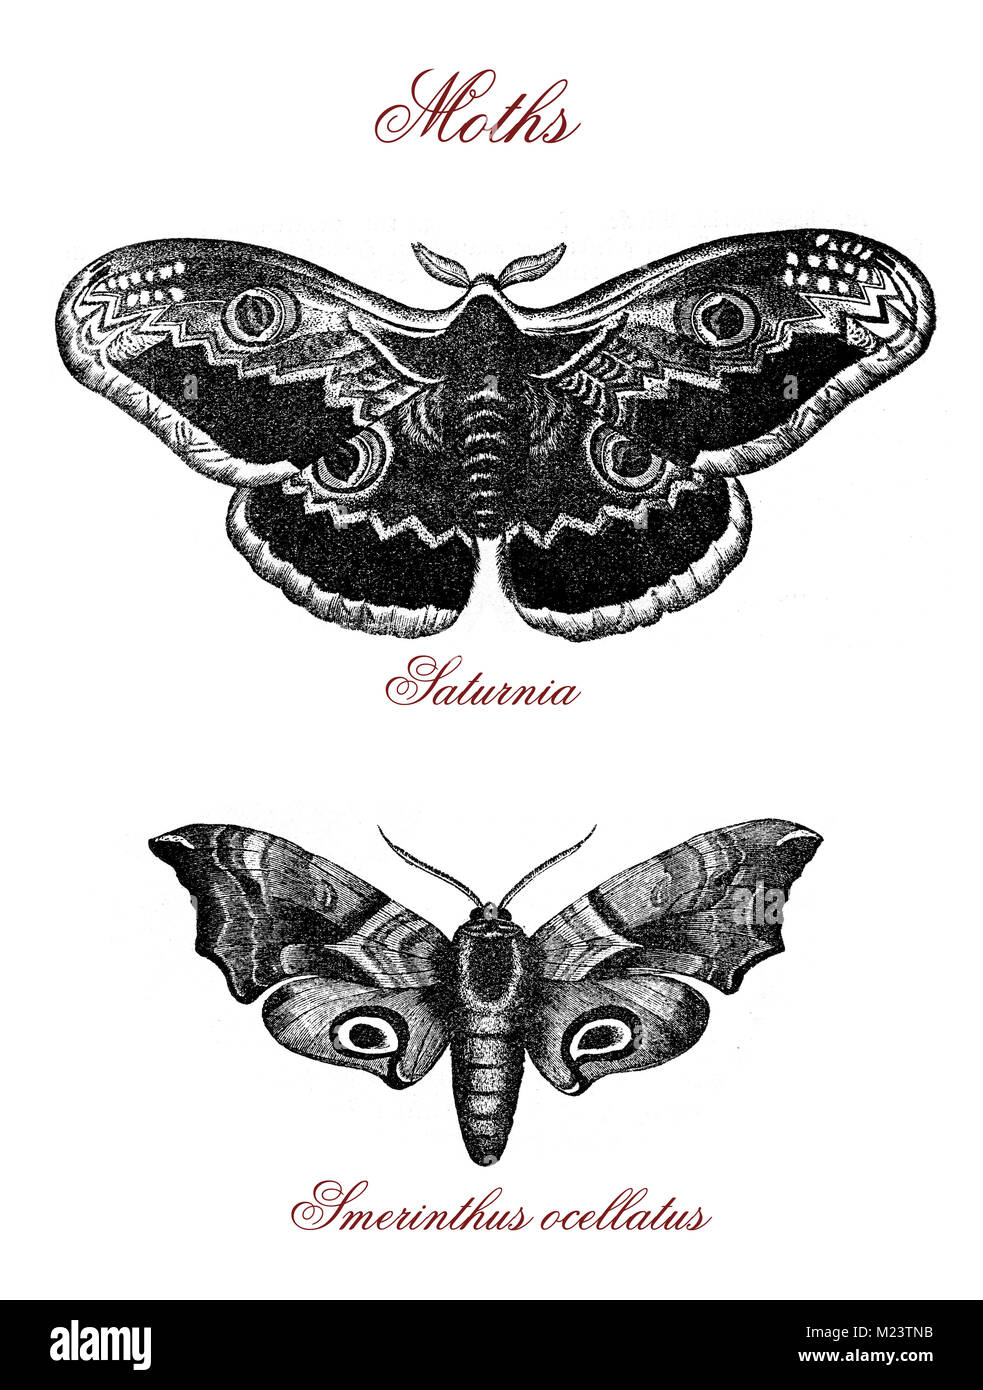 Moths: saturnia and smerinthus ocellatus, vintage engraving Stock Photo